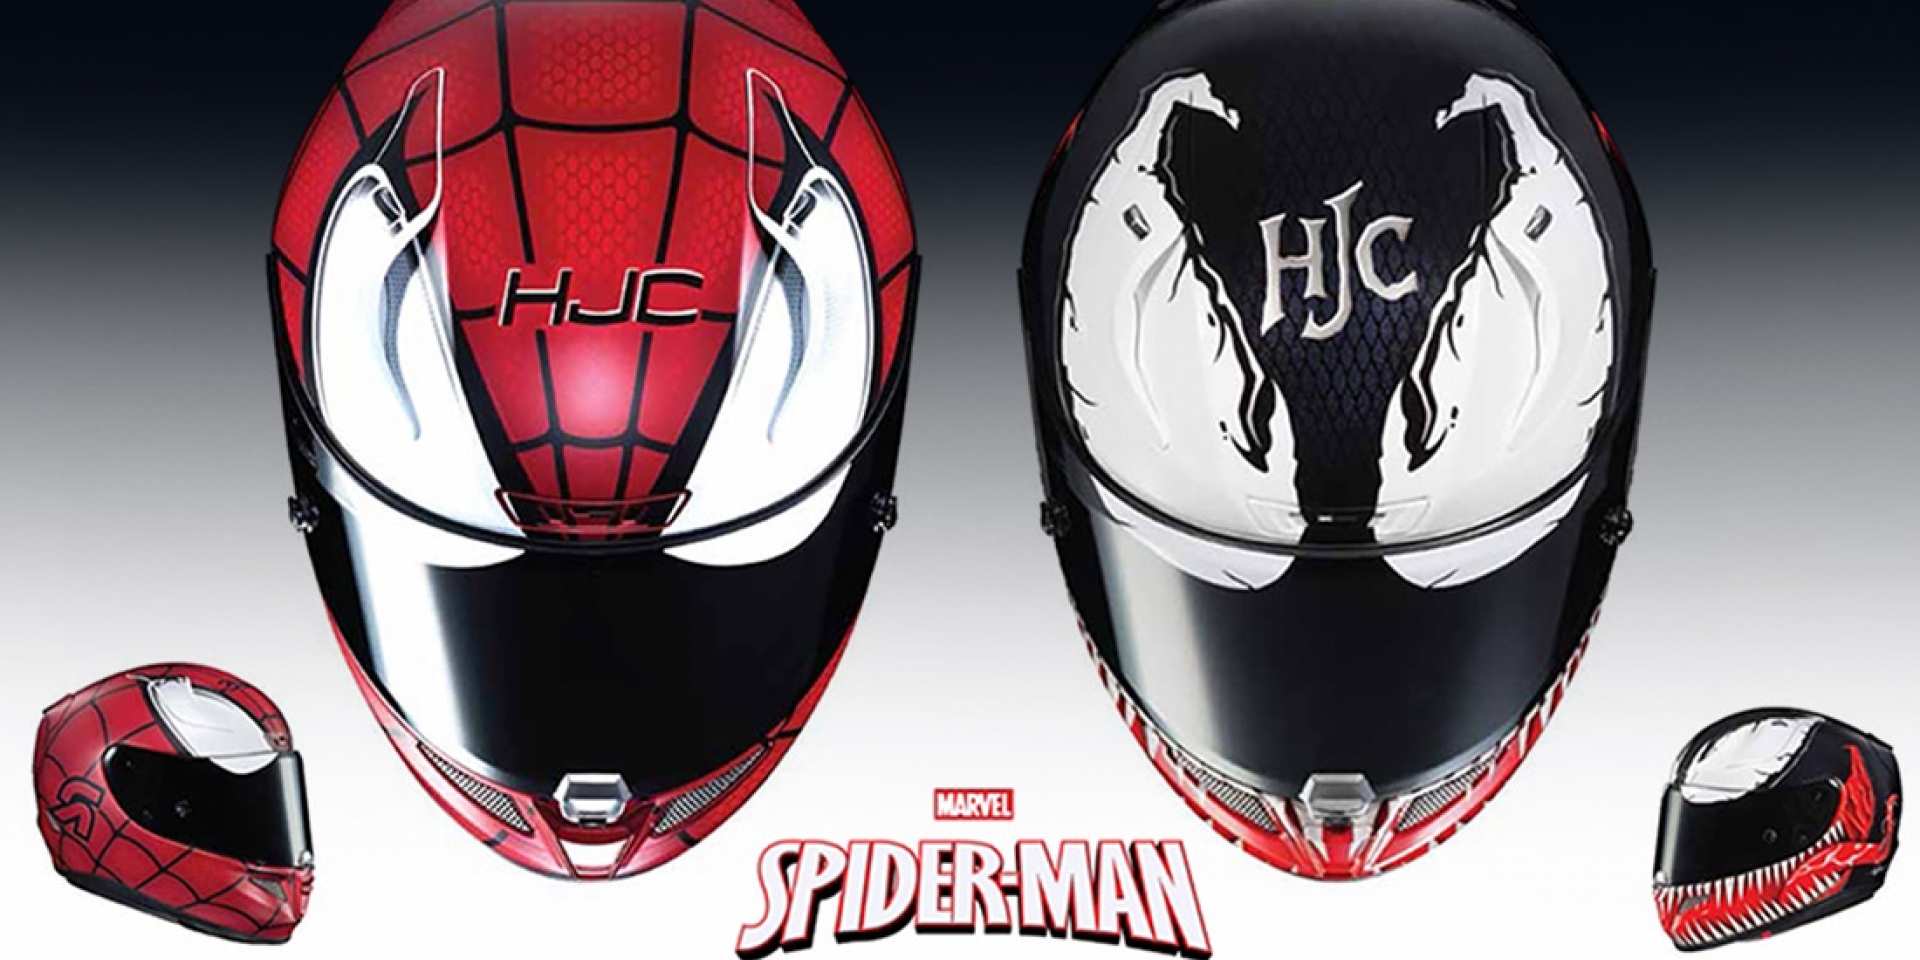 HJC X Marvel 聯名款第二彈。Spiderman彩繪款登場